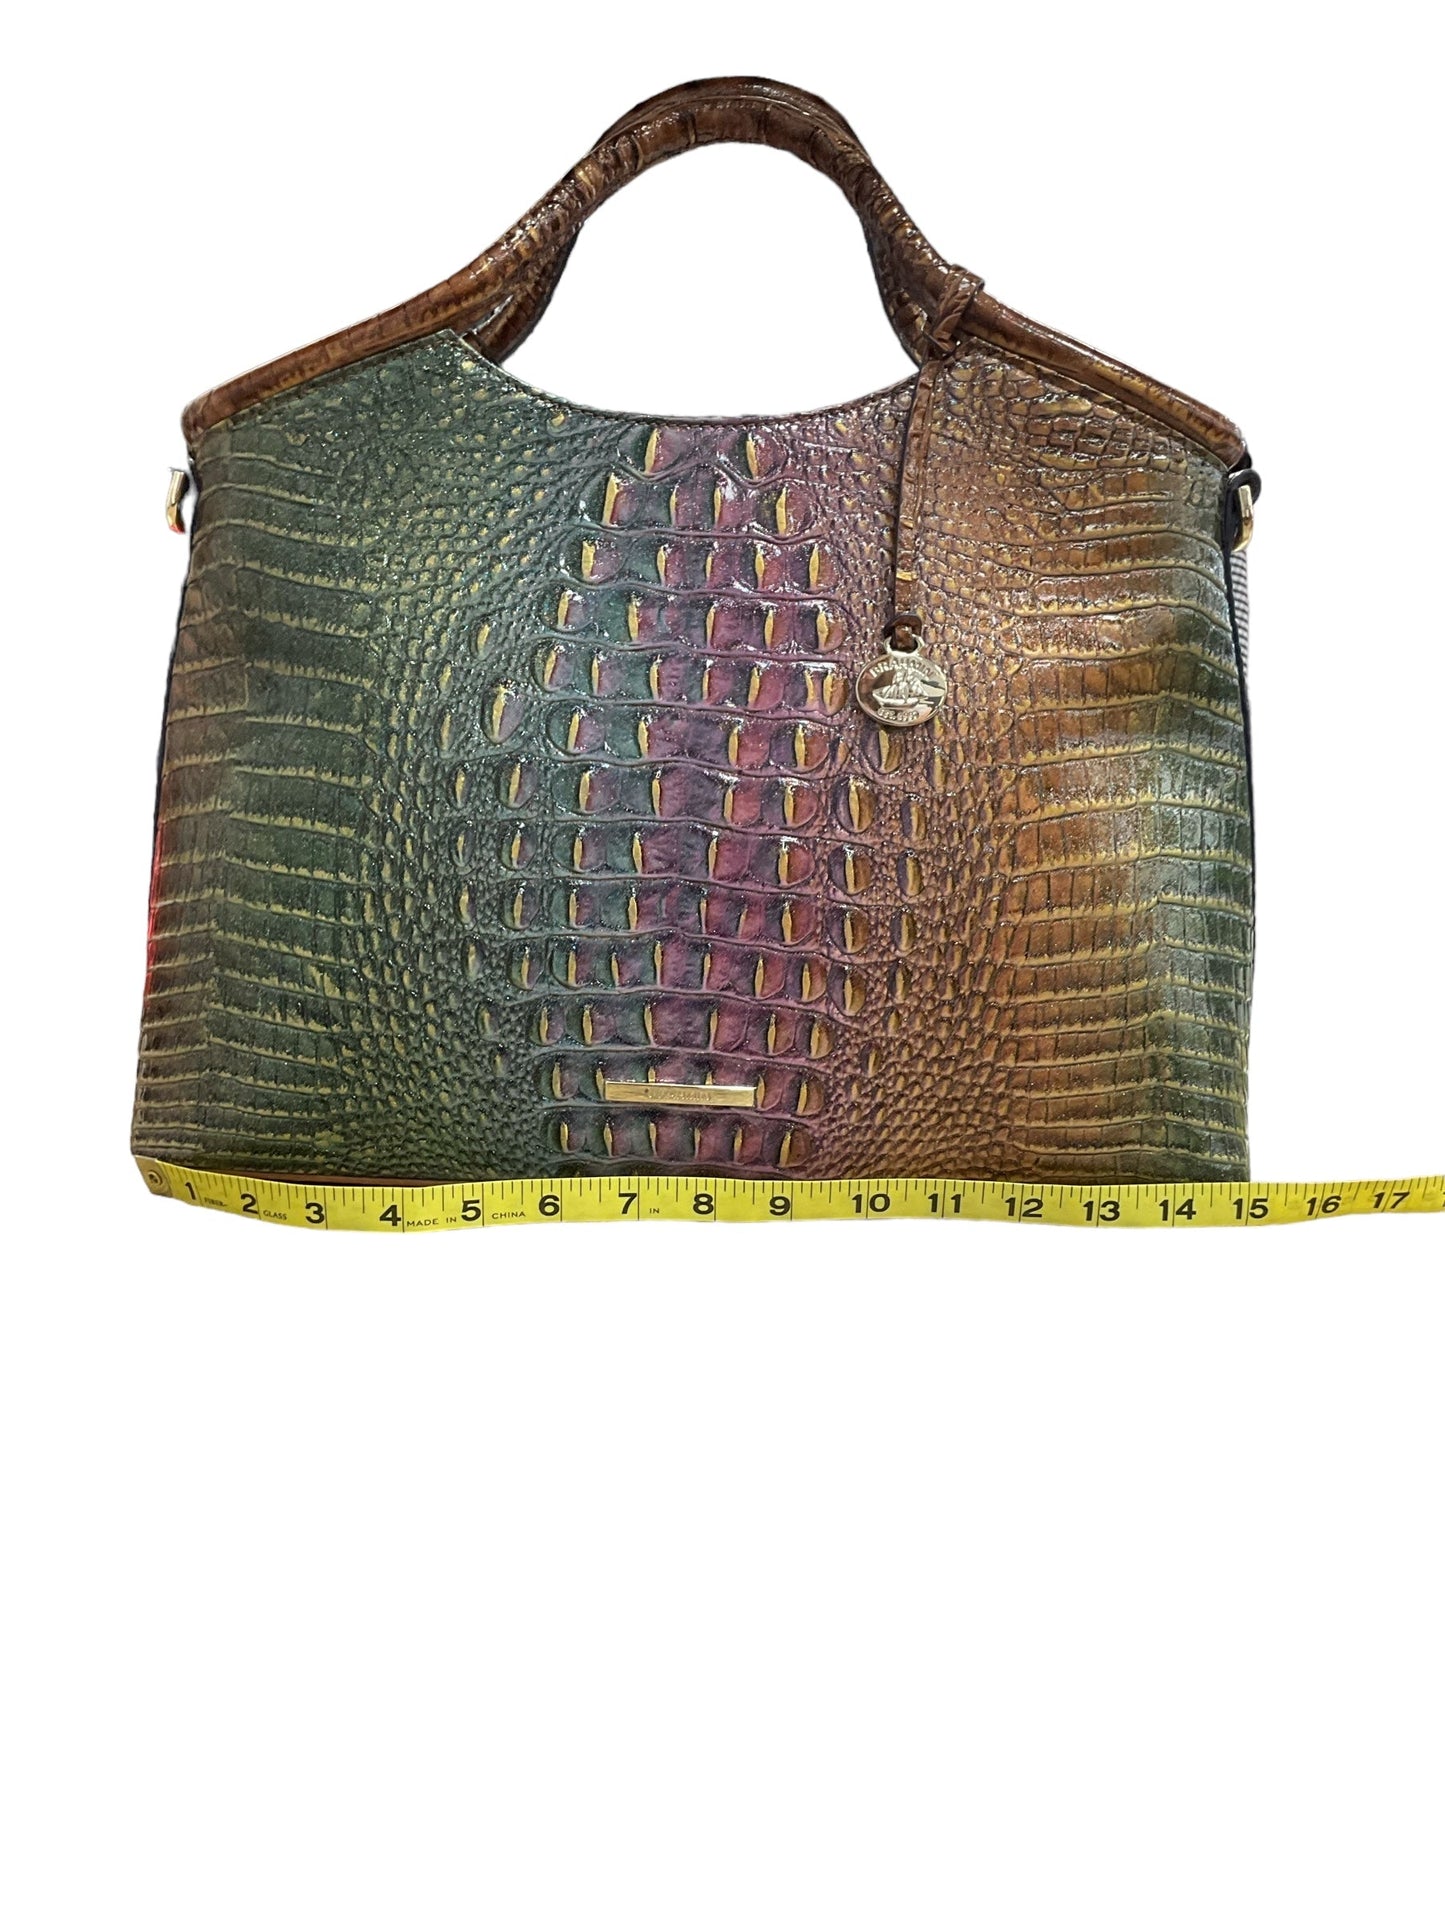 Brown & Green Handbag Designer Brahmin, Size Large